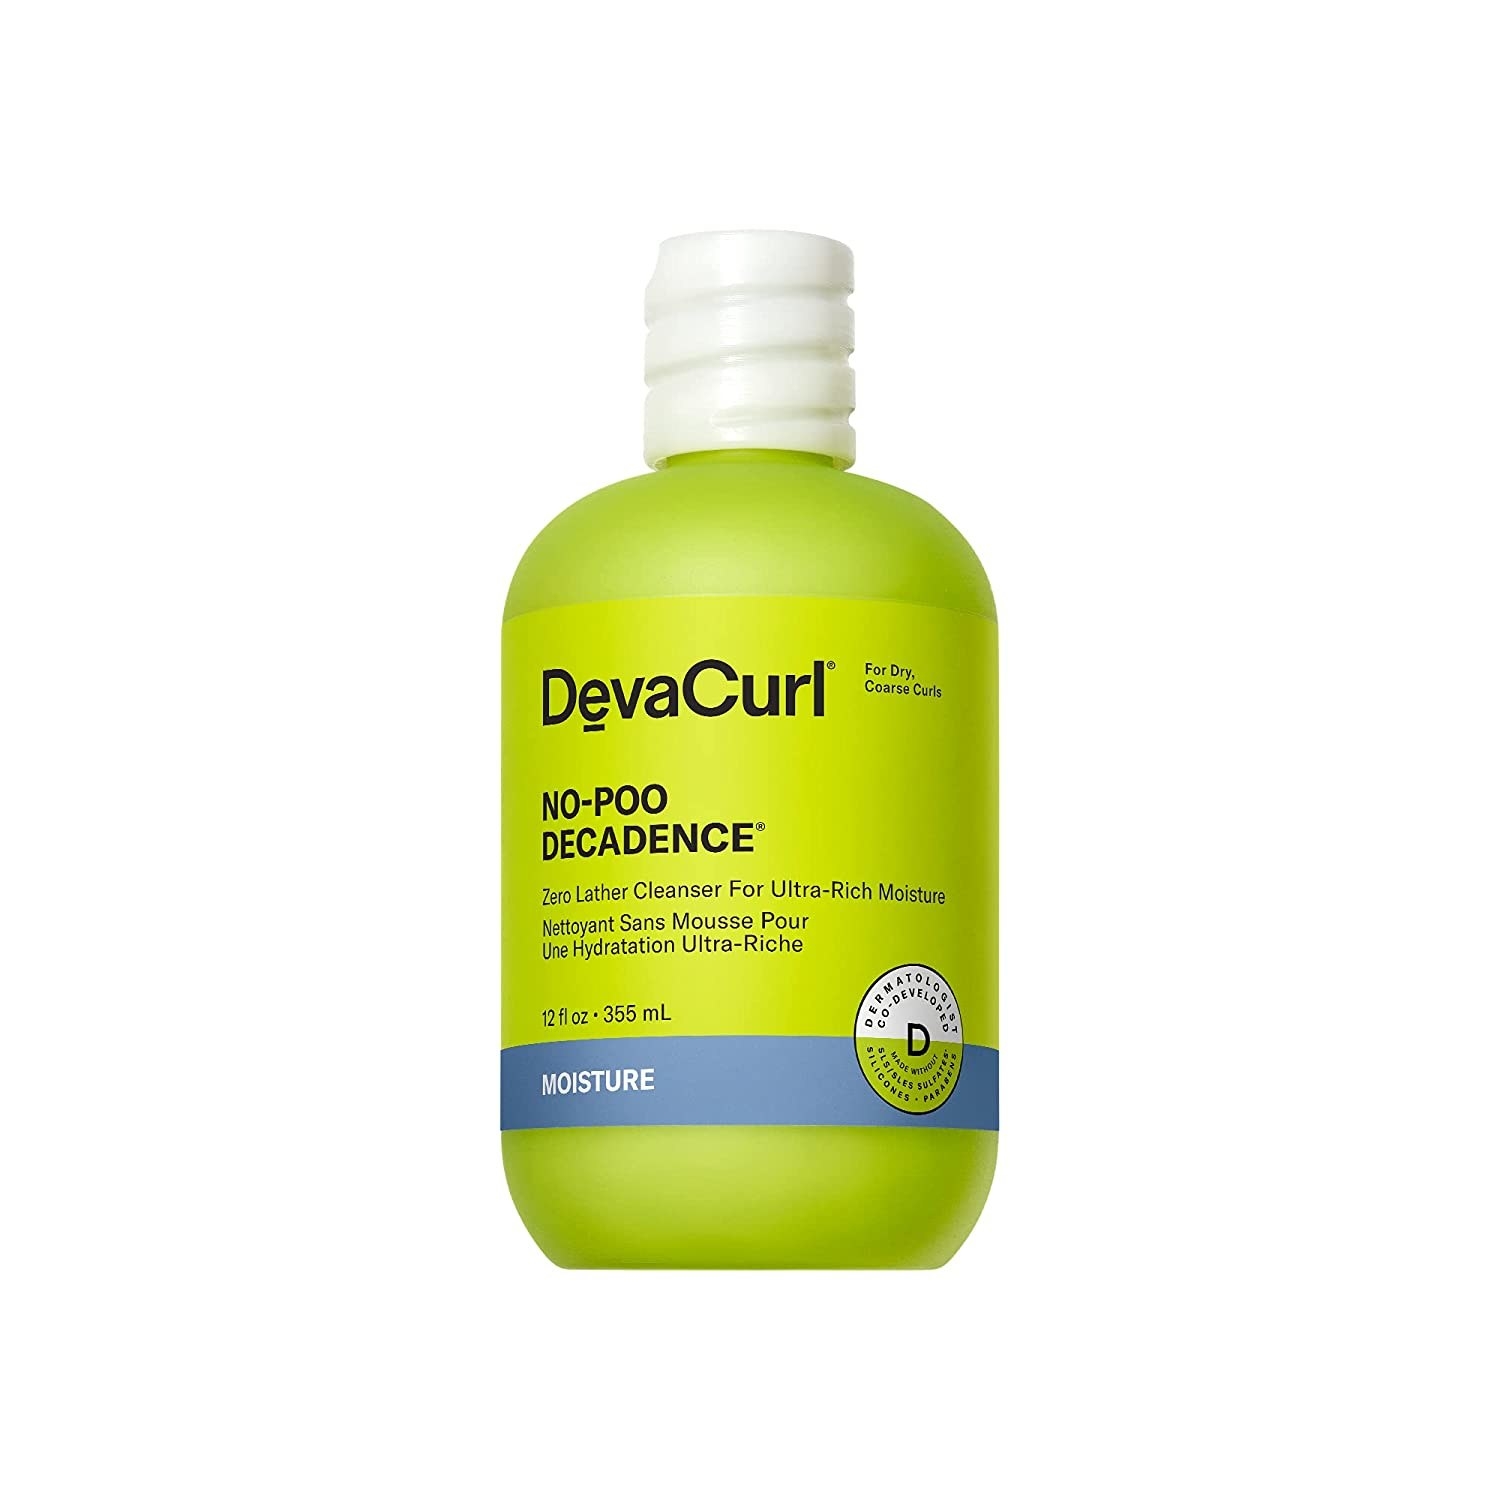 DevaCurl No-Poo Decadence zero lather cleanser in green bottle